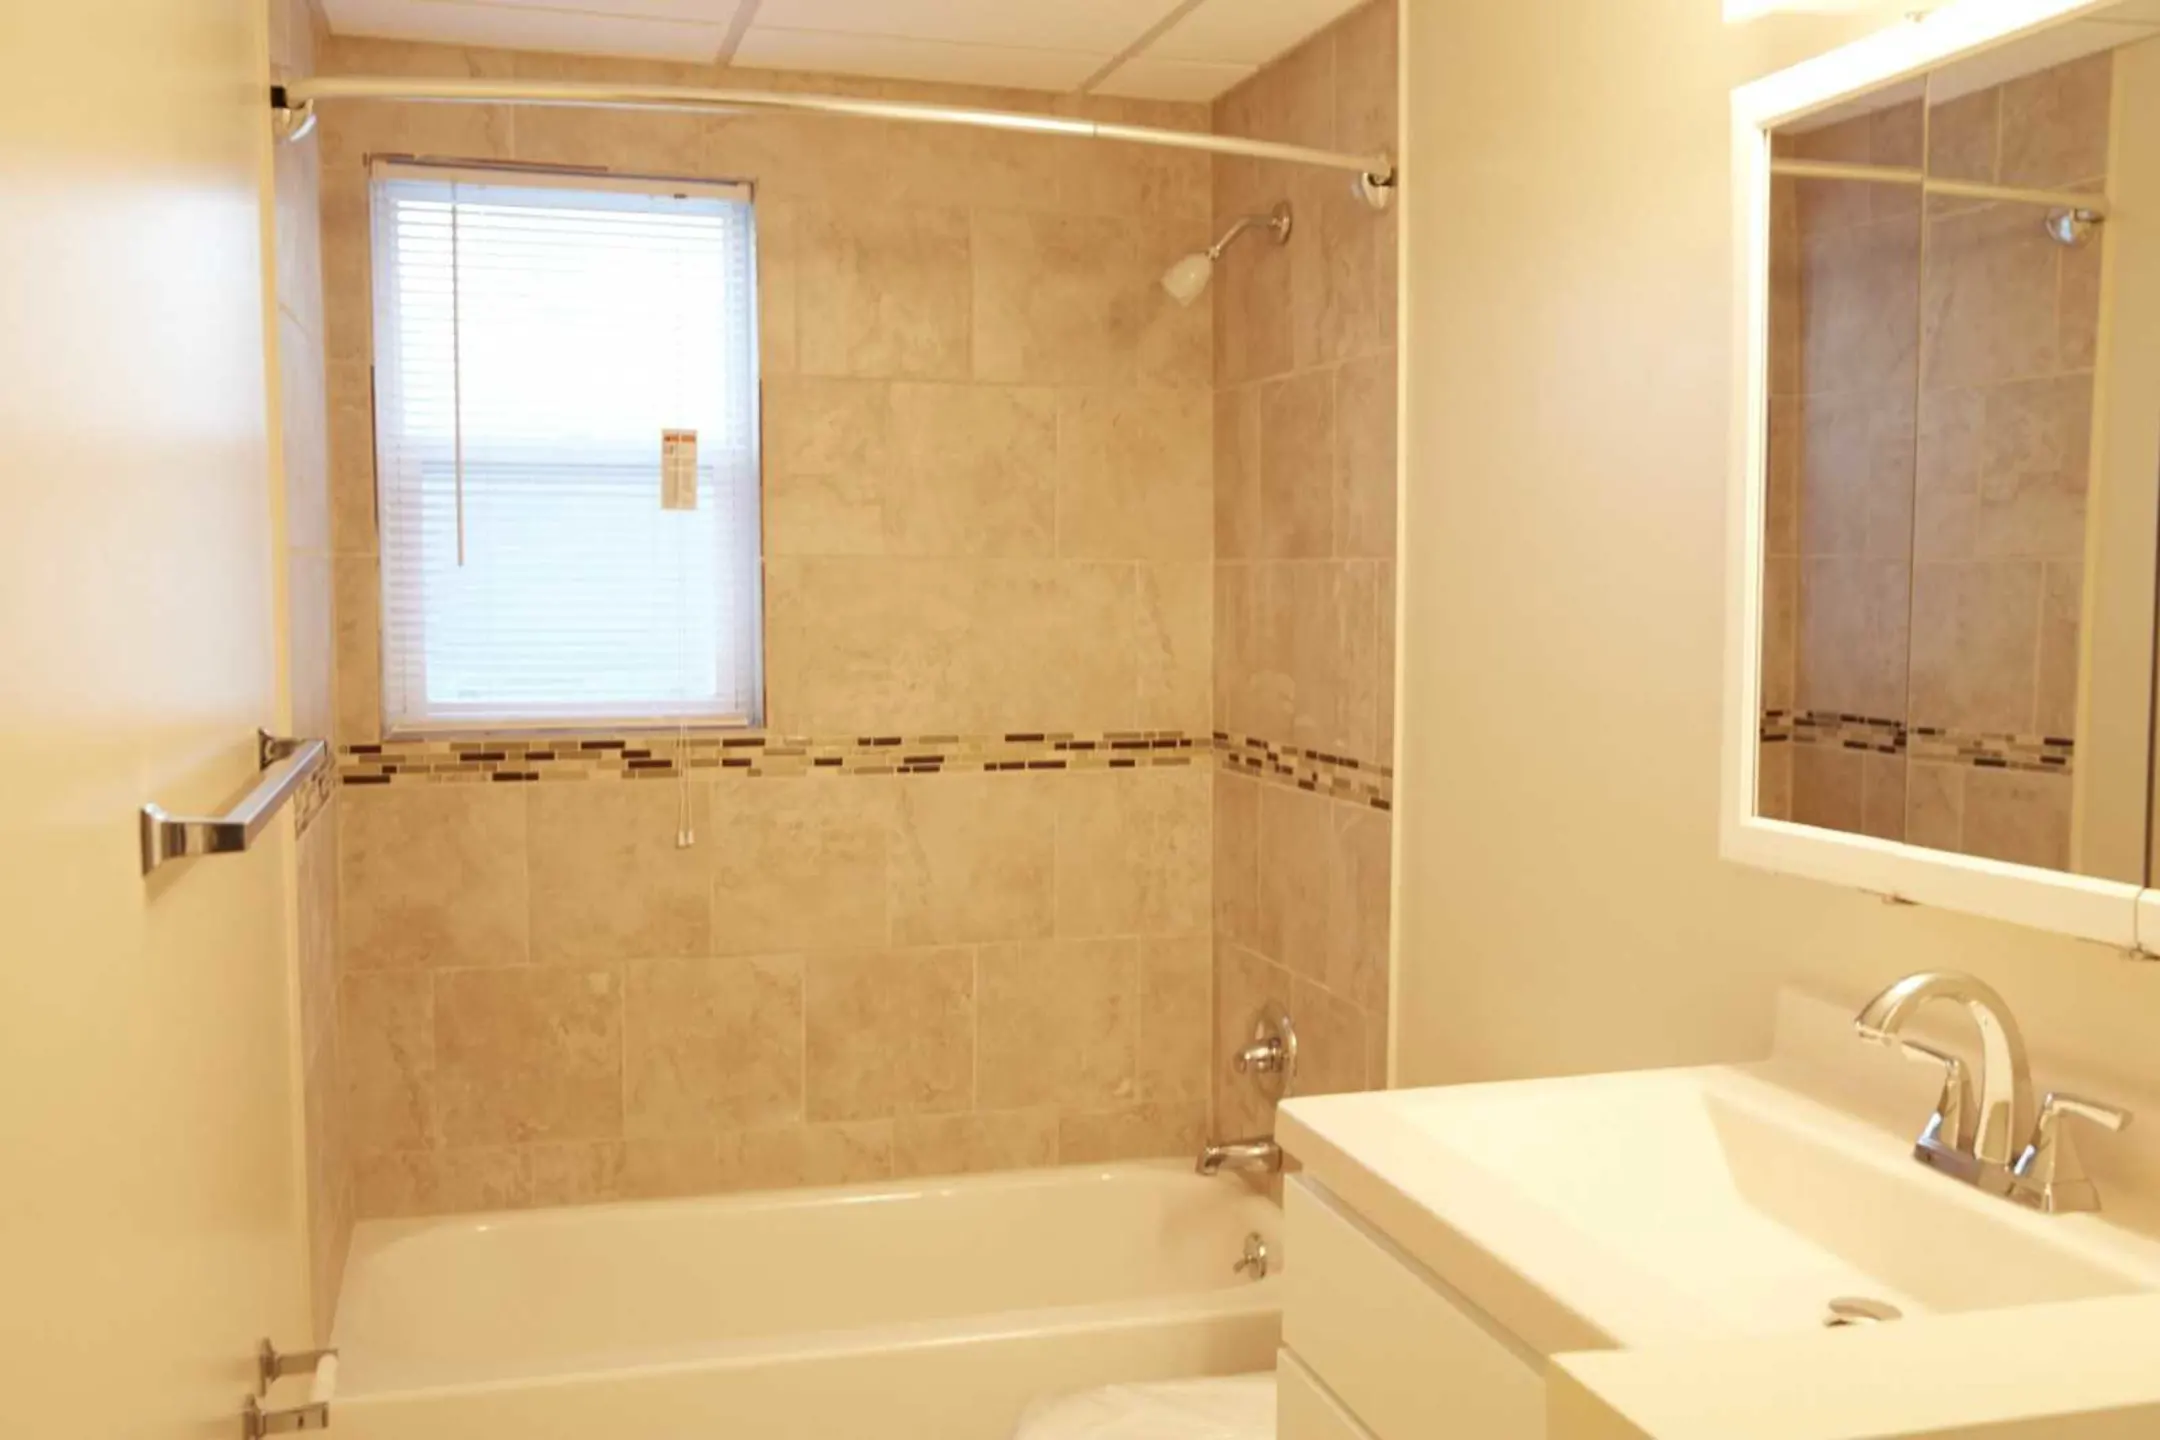 Bathroom - Tor View Village Apartments - Garnerville, NY